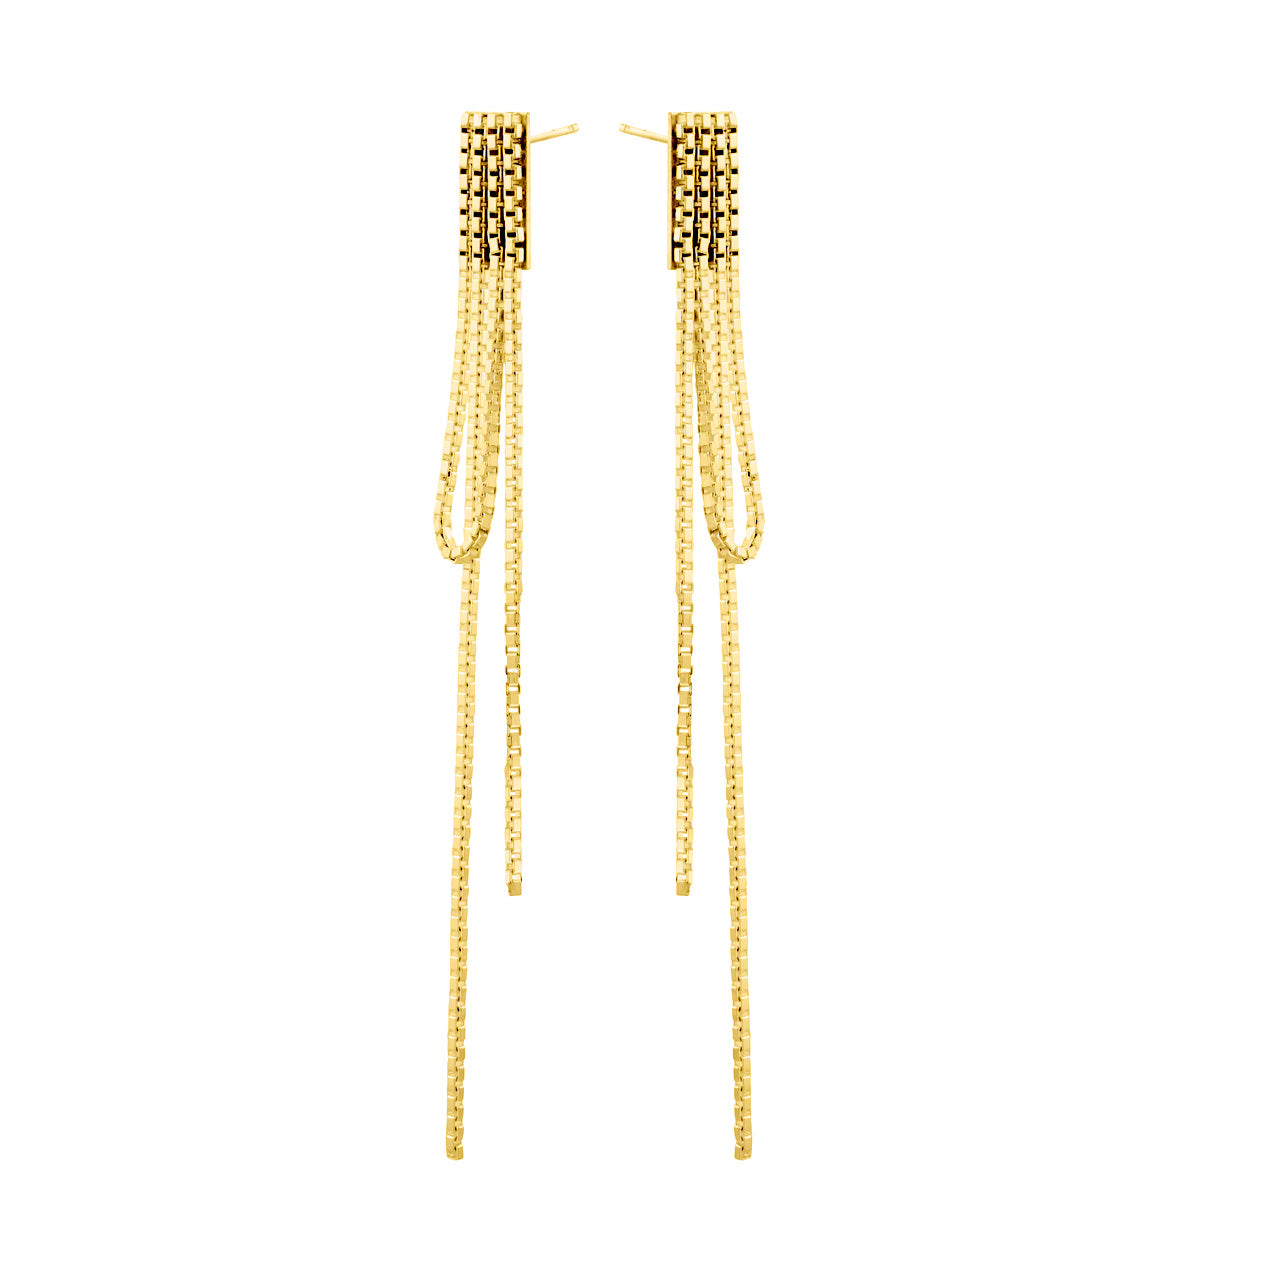 gold festive draped earrings